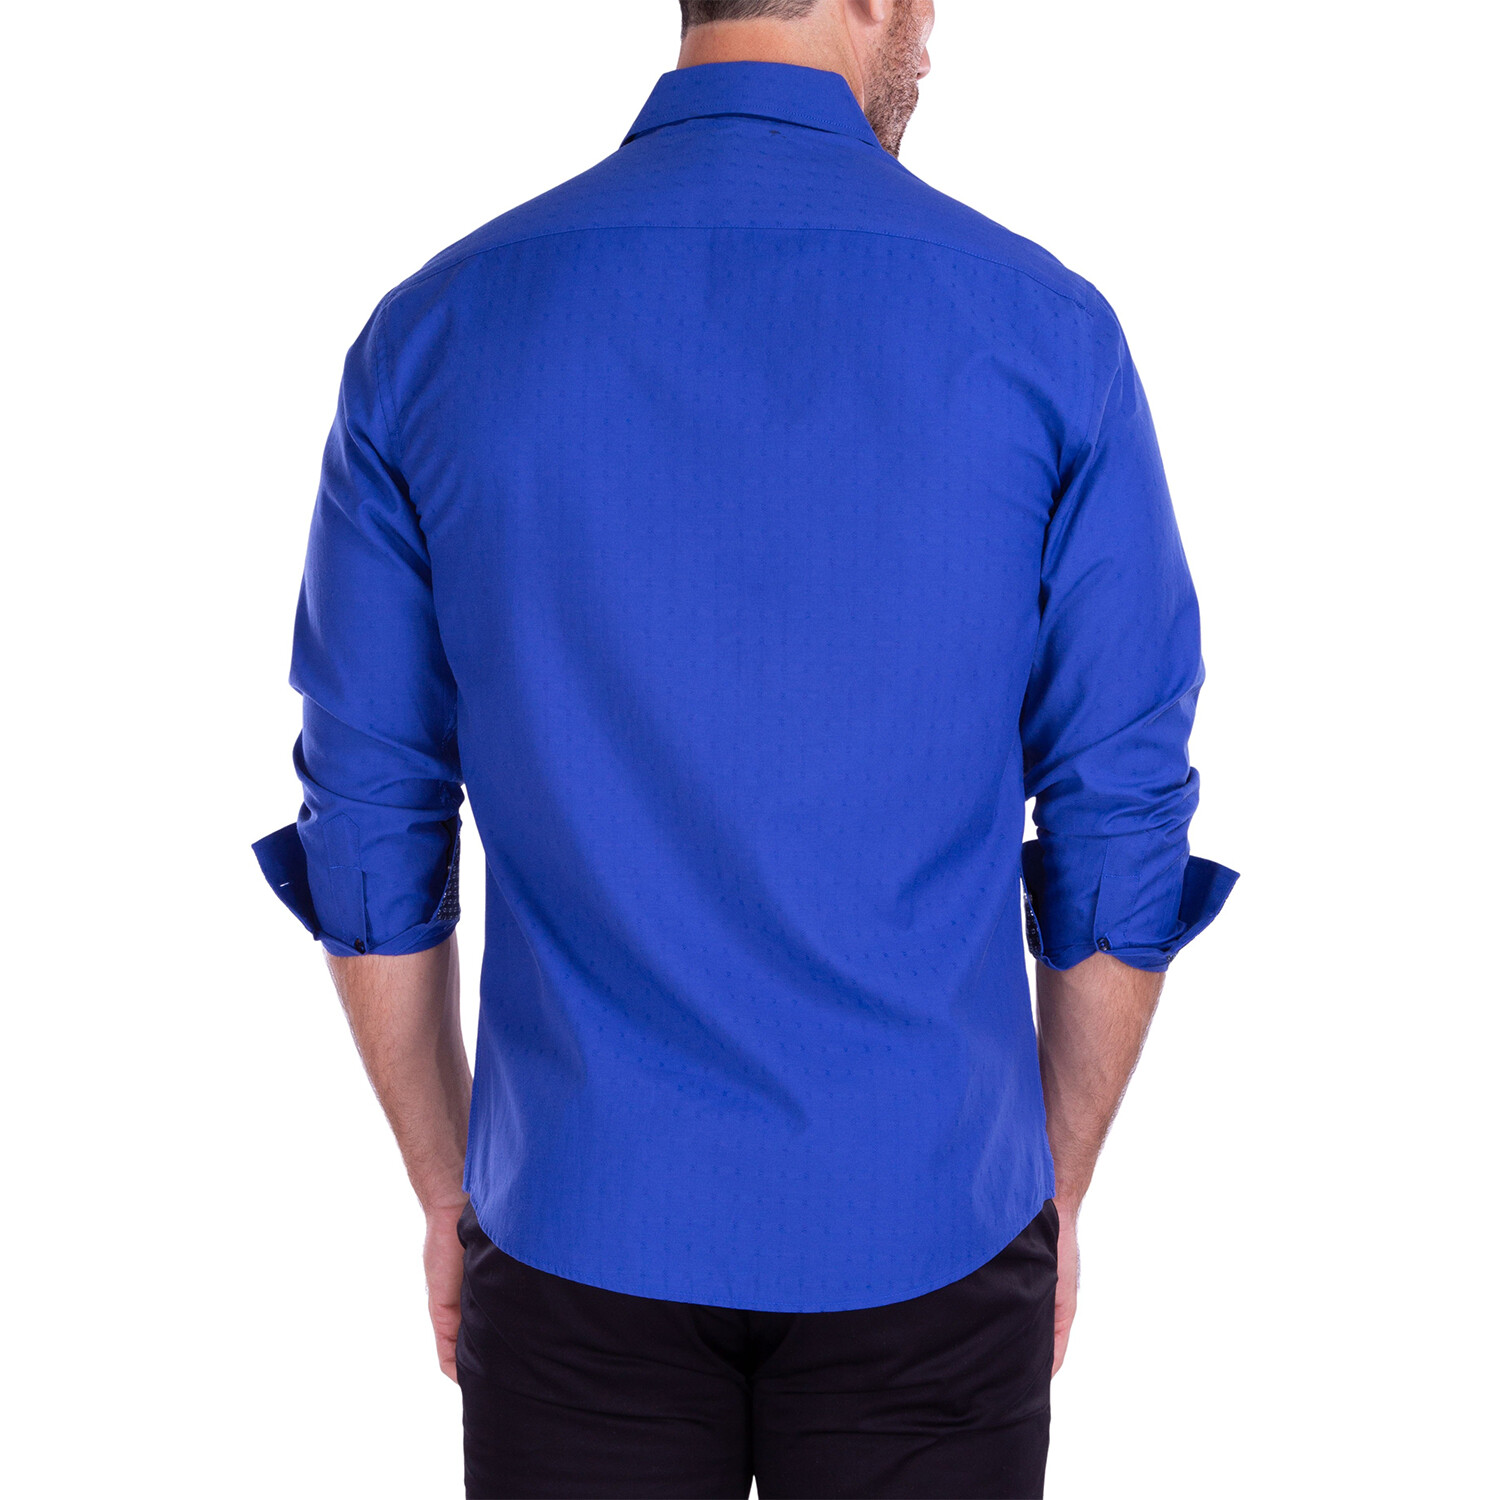 microprint-long-sleeve-button-up-shirt-royal-blue-l-bespoke